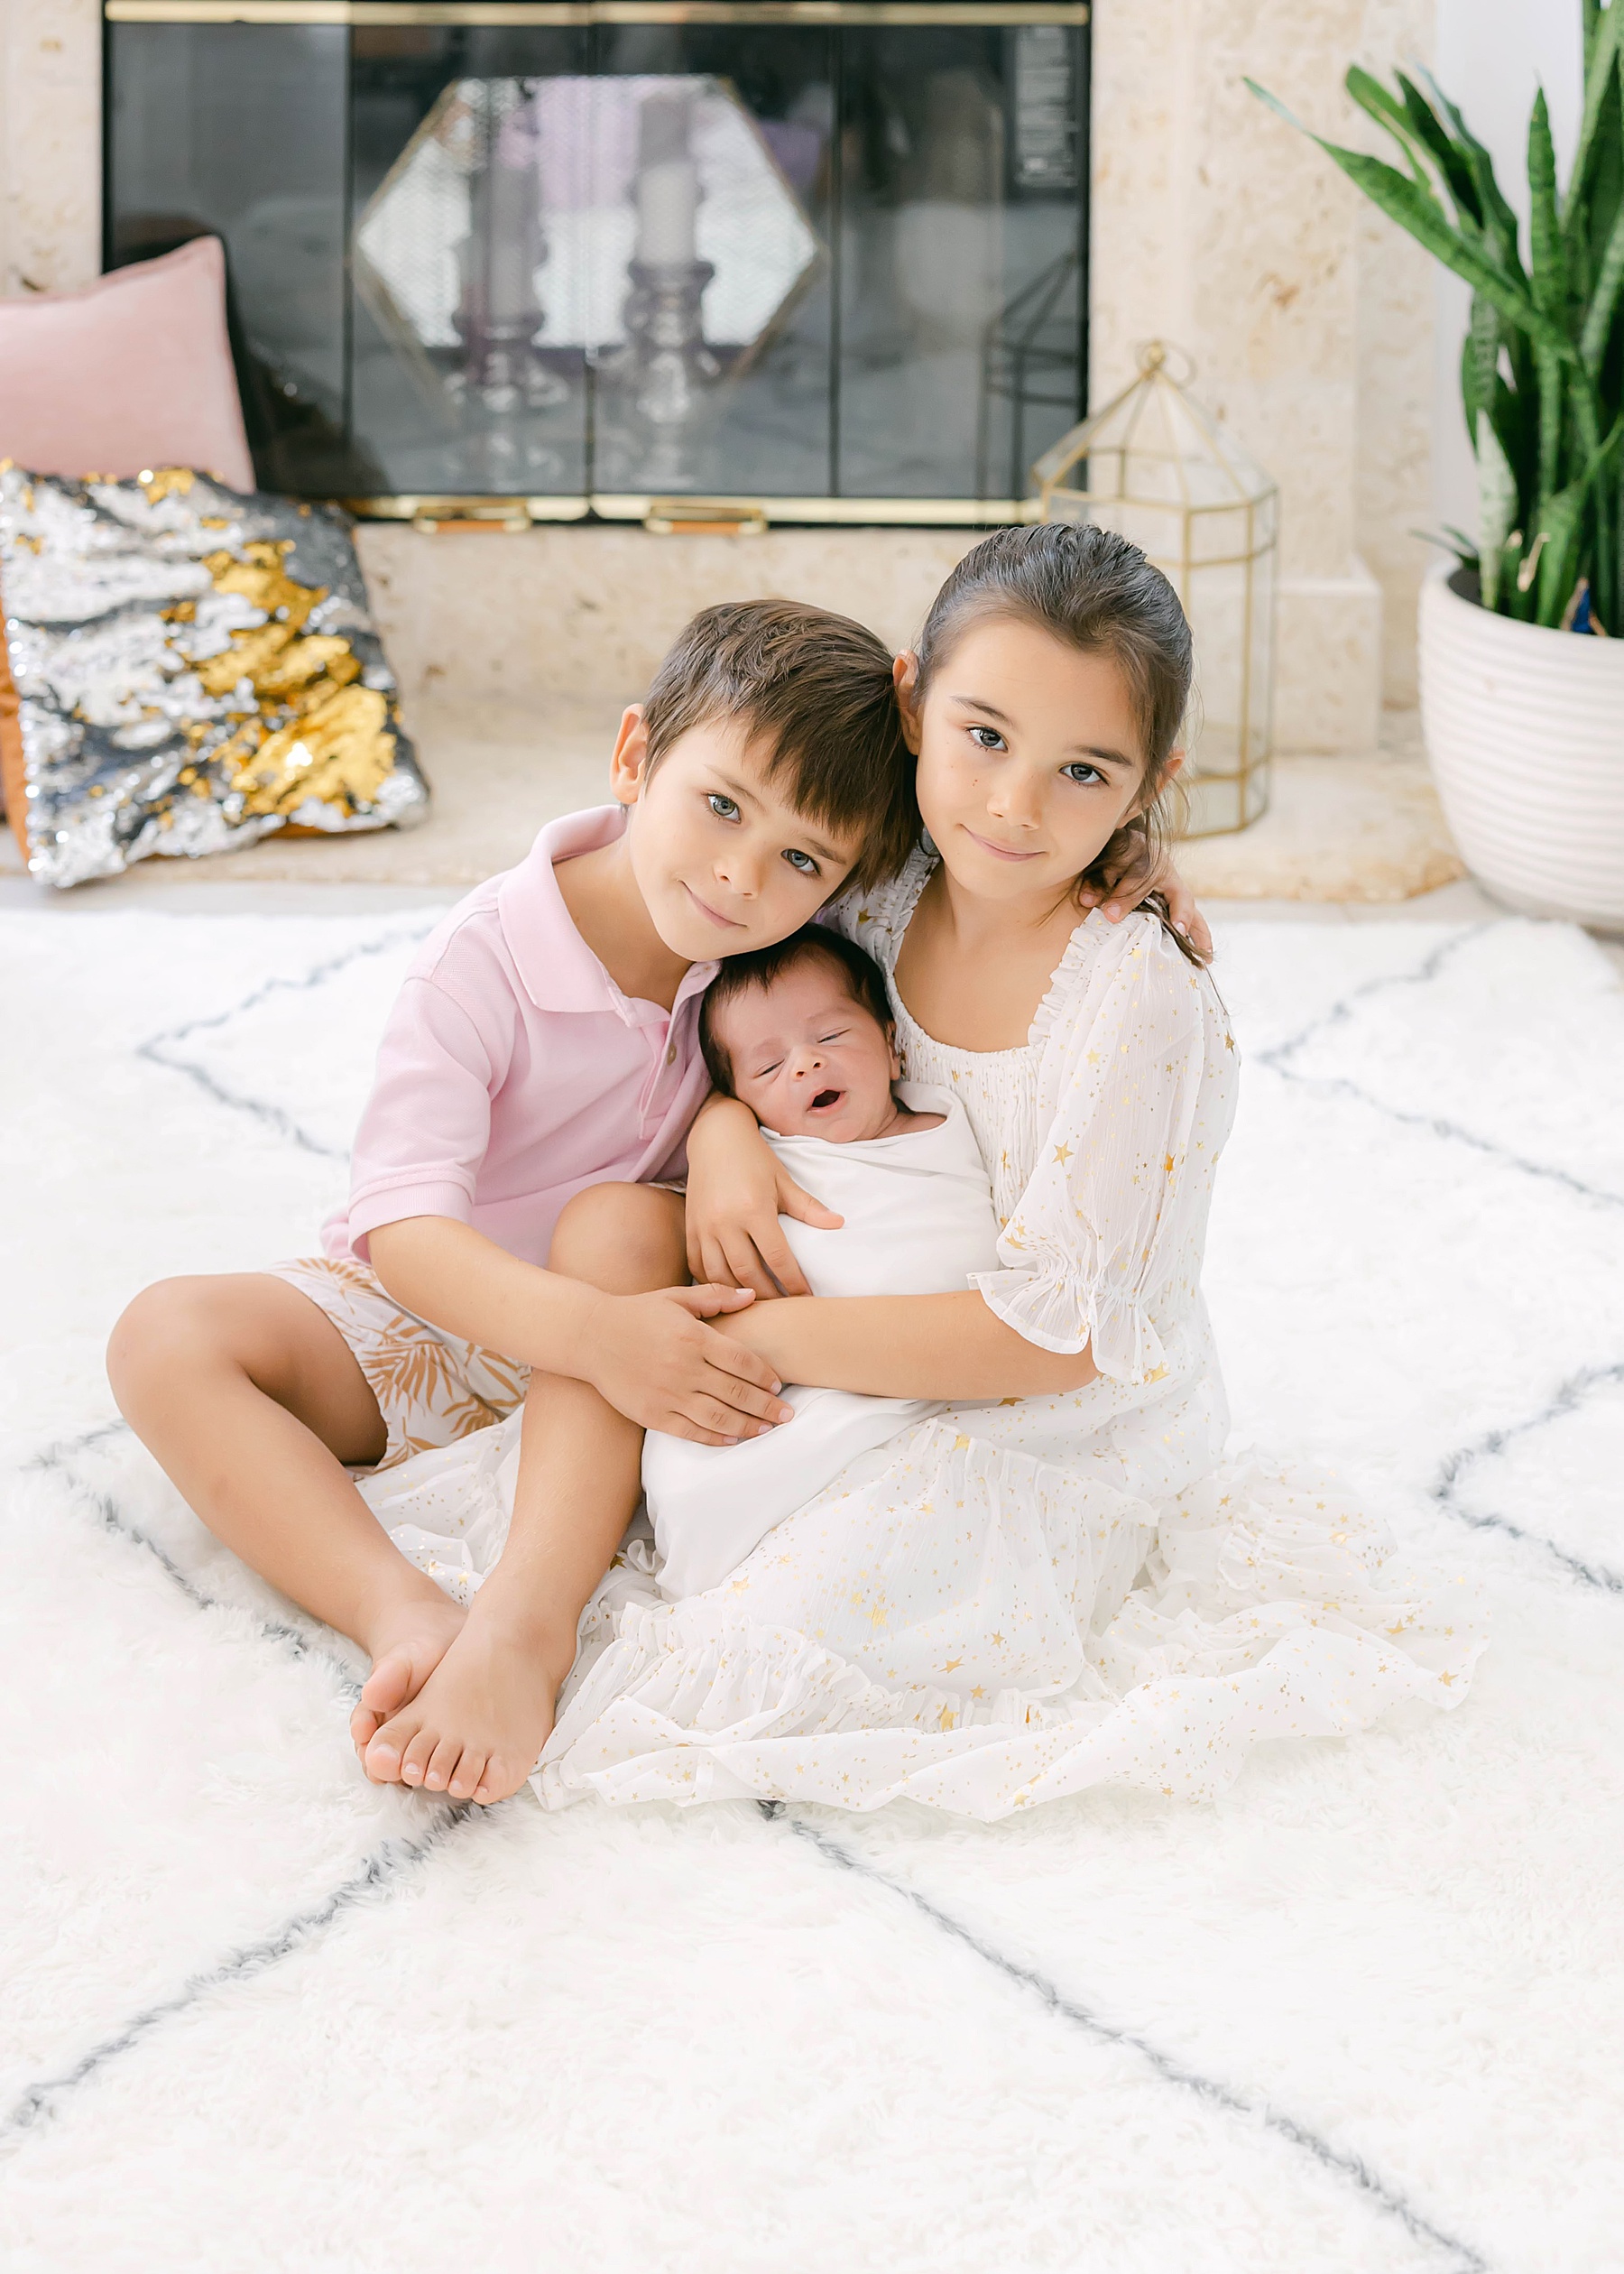 children holding newborn baby sitting on carpet in white clothing